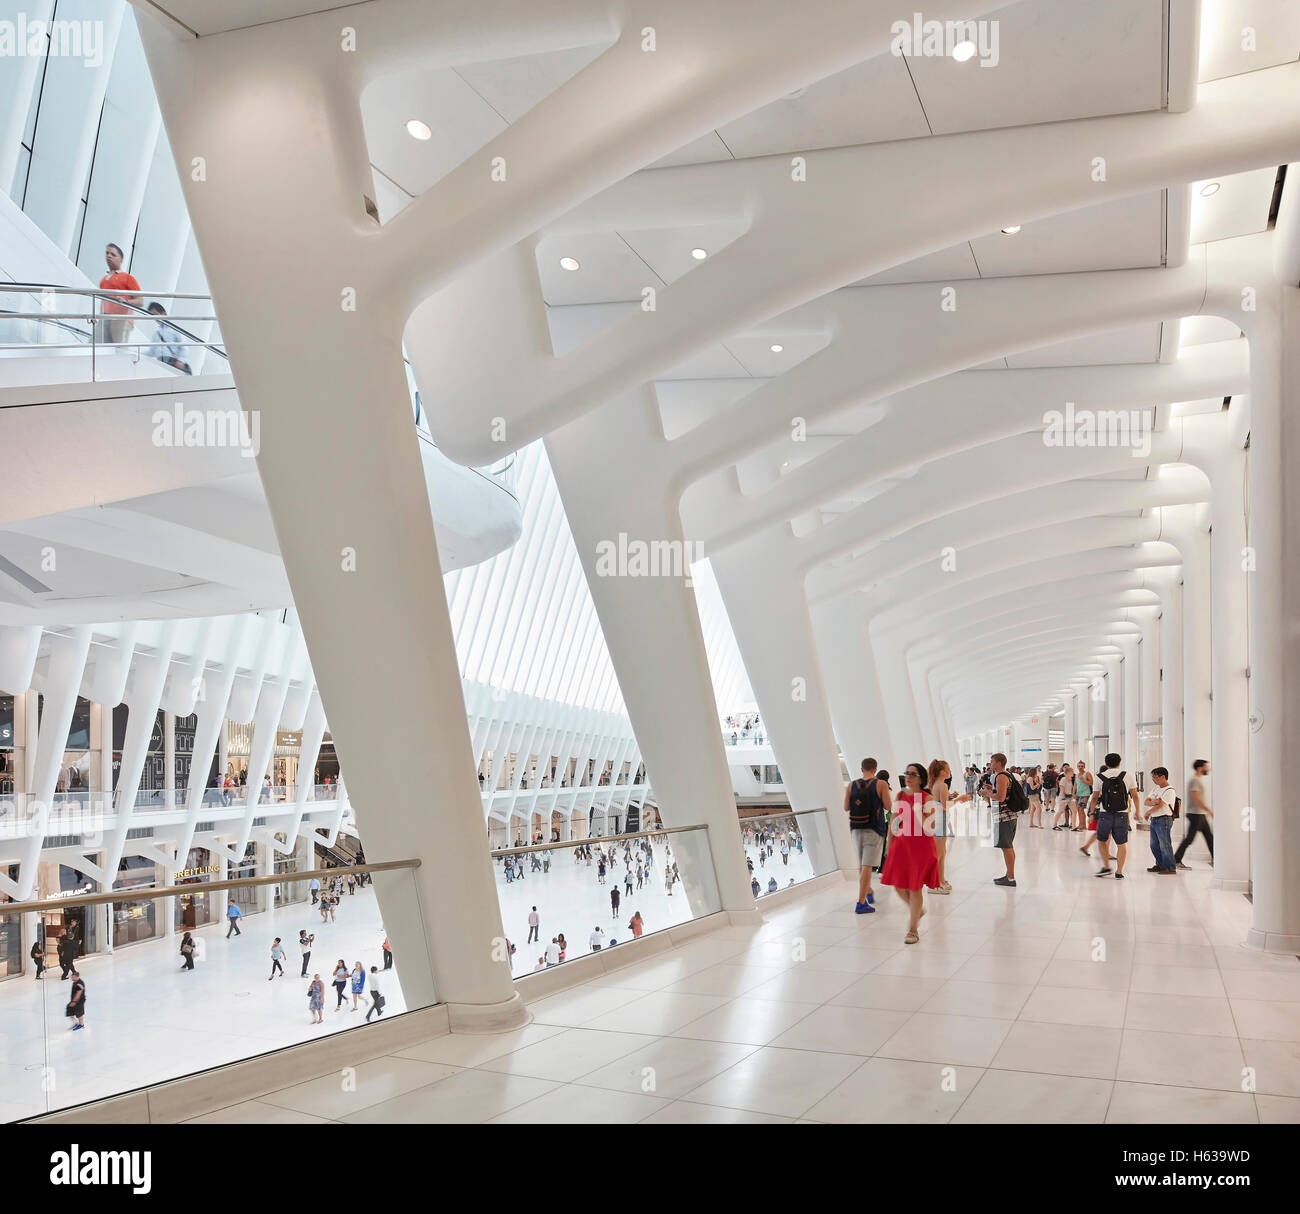 Cathedral-like transit hall interior viewed from corridor. The Oculus, World Trade Center Transportation Hub, New York, United States. Architect: Santiago Calatrava, 2016. Stock Photo